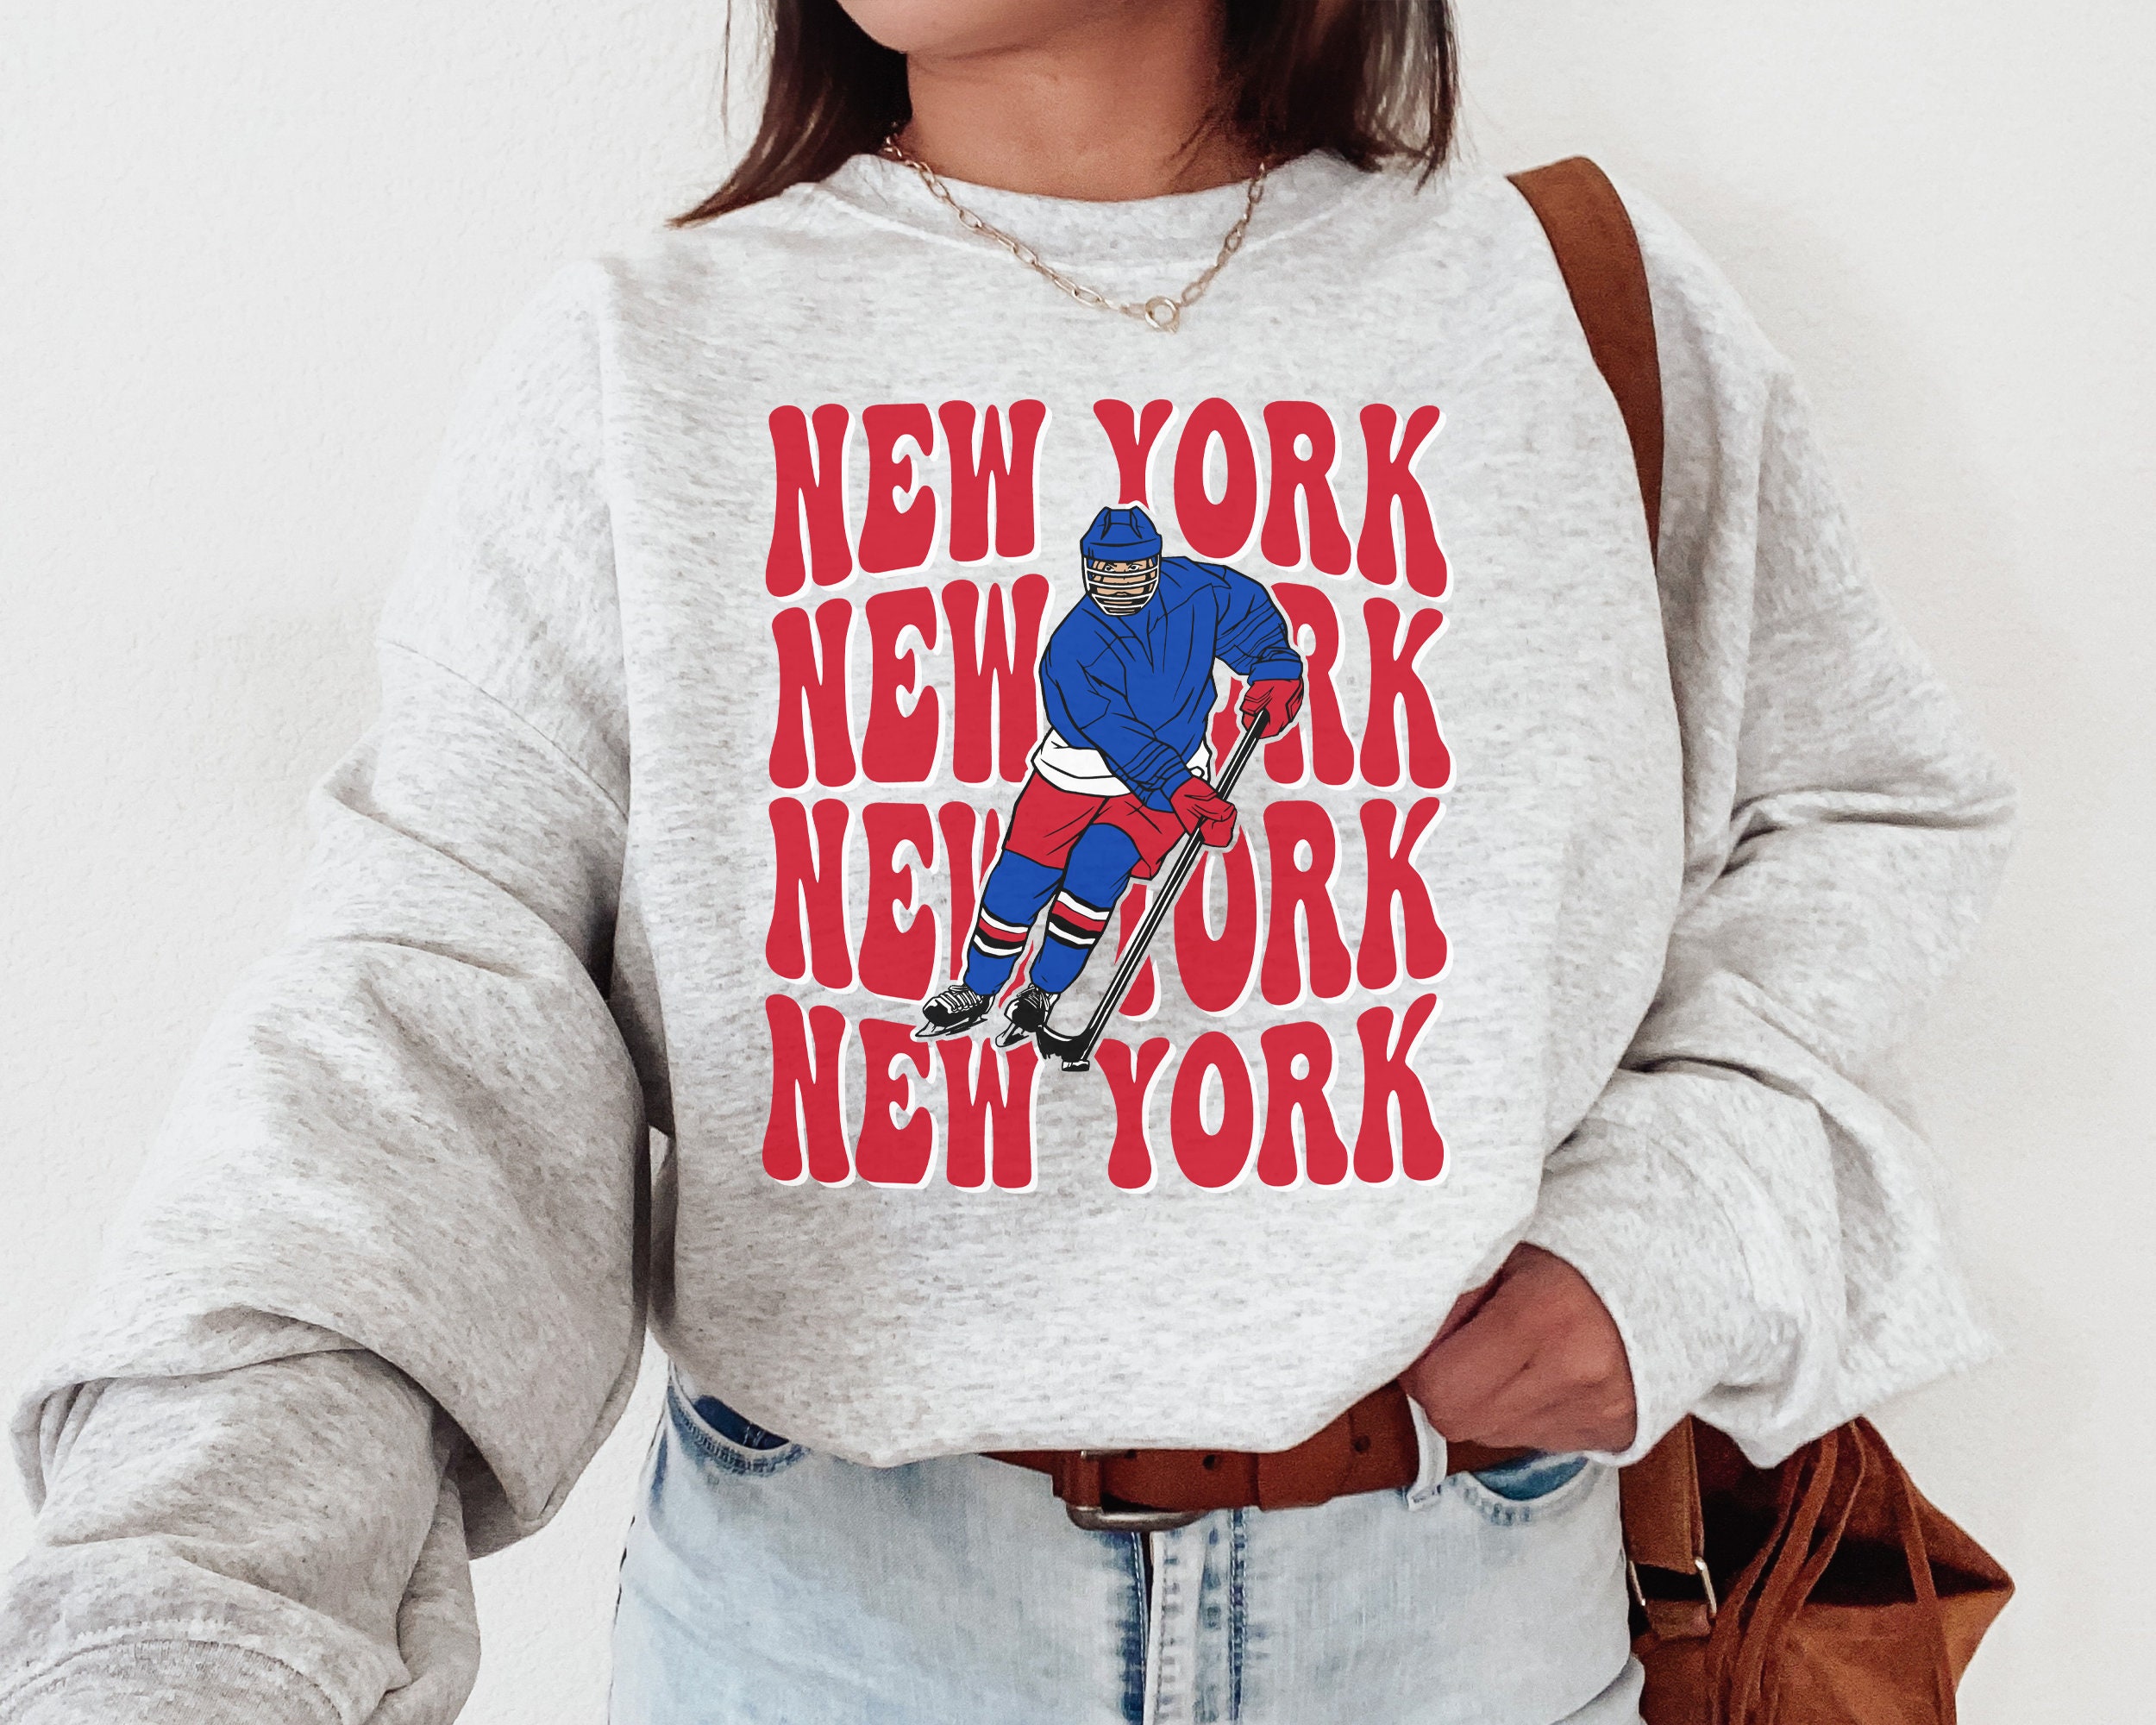 New York Rangers 90's Vintage NHL Crewneck Sweatshirt Royal / 2XL